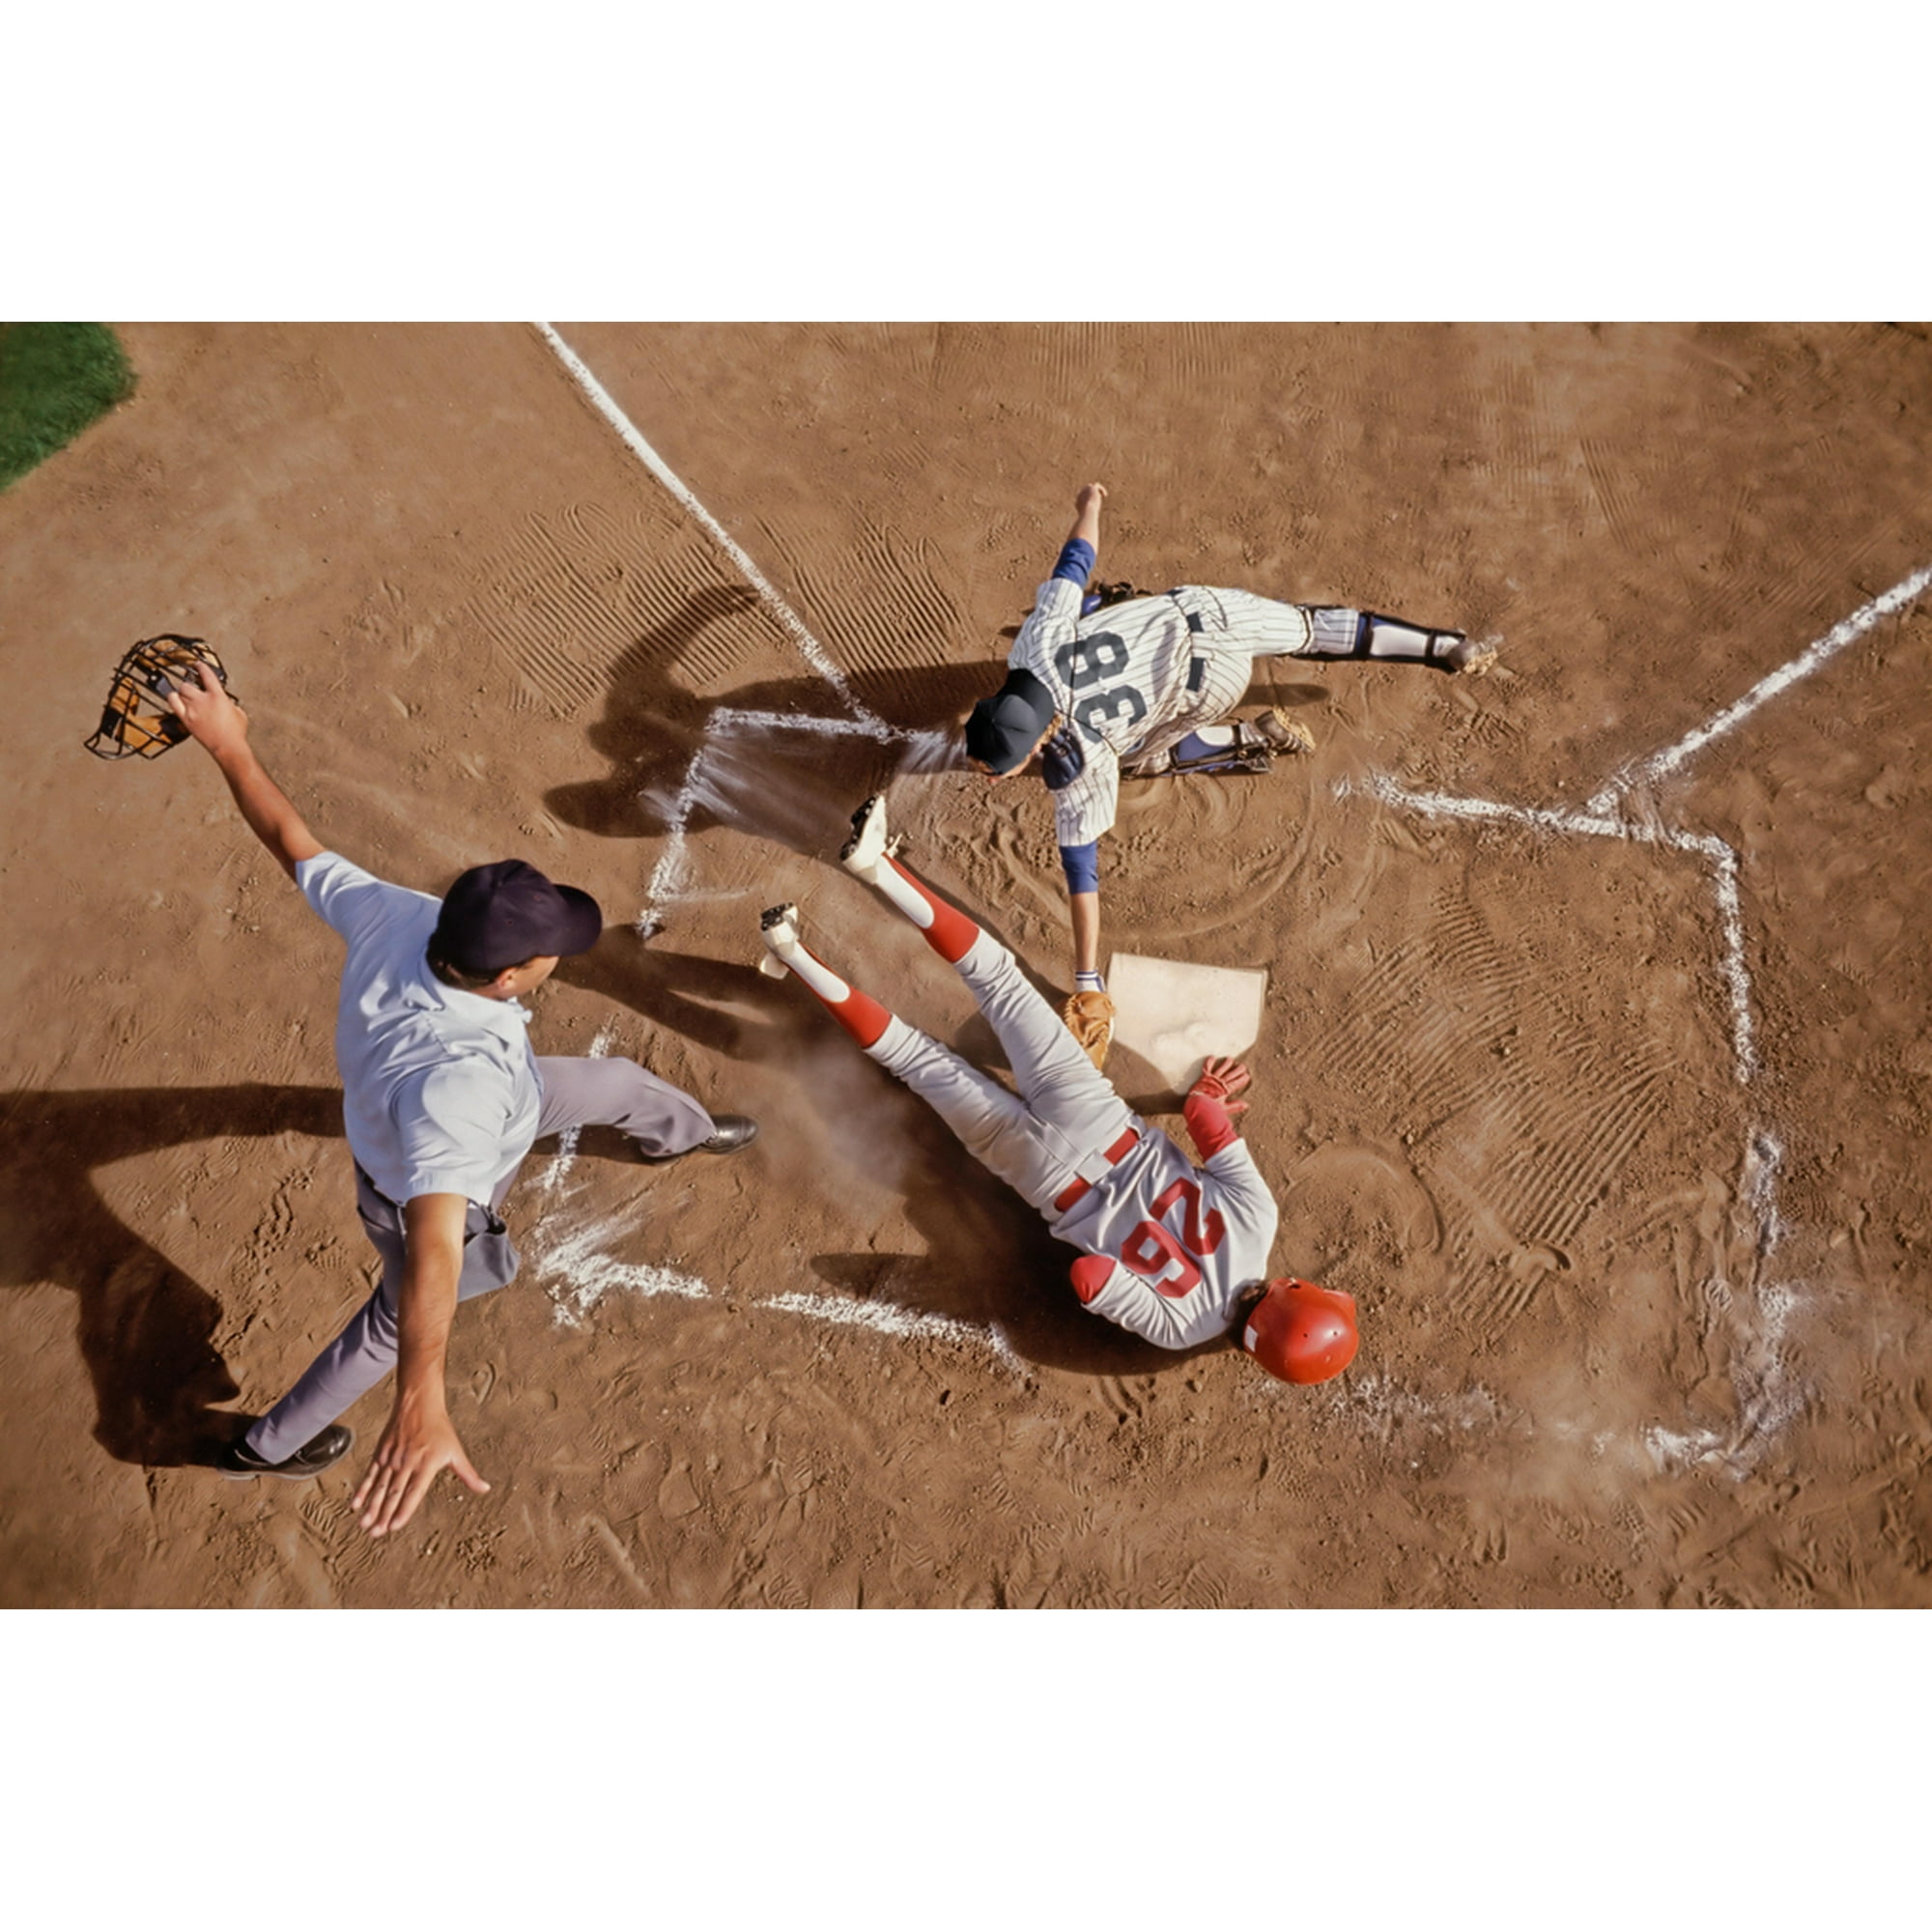 Umpire Signaling Baseball Player Safe Photo Art Print Poster 18x12